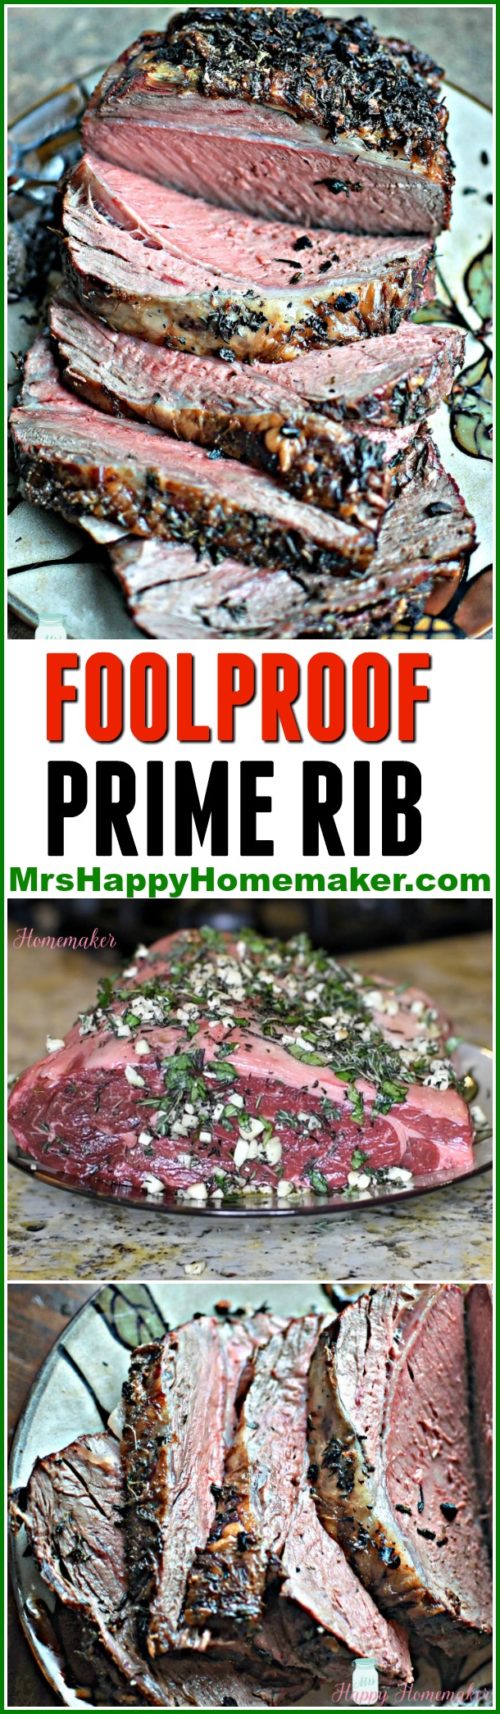 Foolproof Prime Rib | MrsHappyHomemaker.com @mrshappyhomemaker #primerib #foolproof #foolproofprimerib #christmasdinner